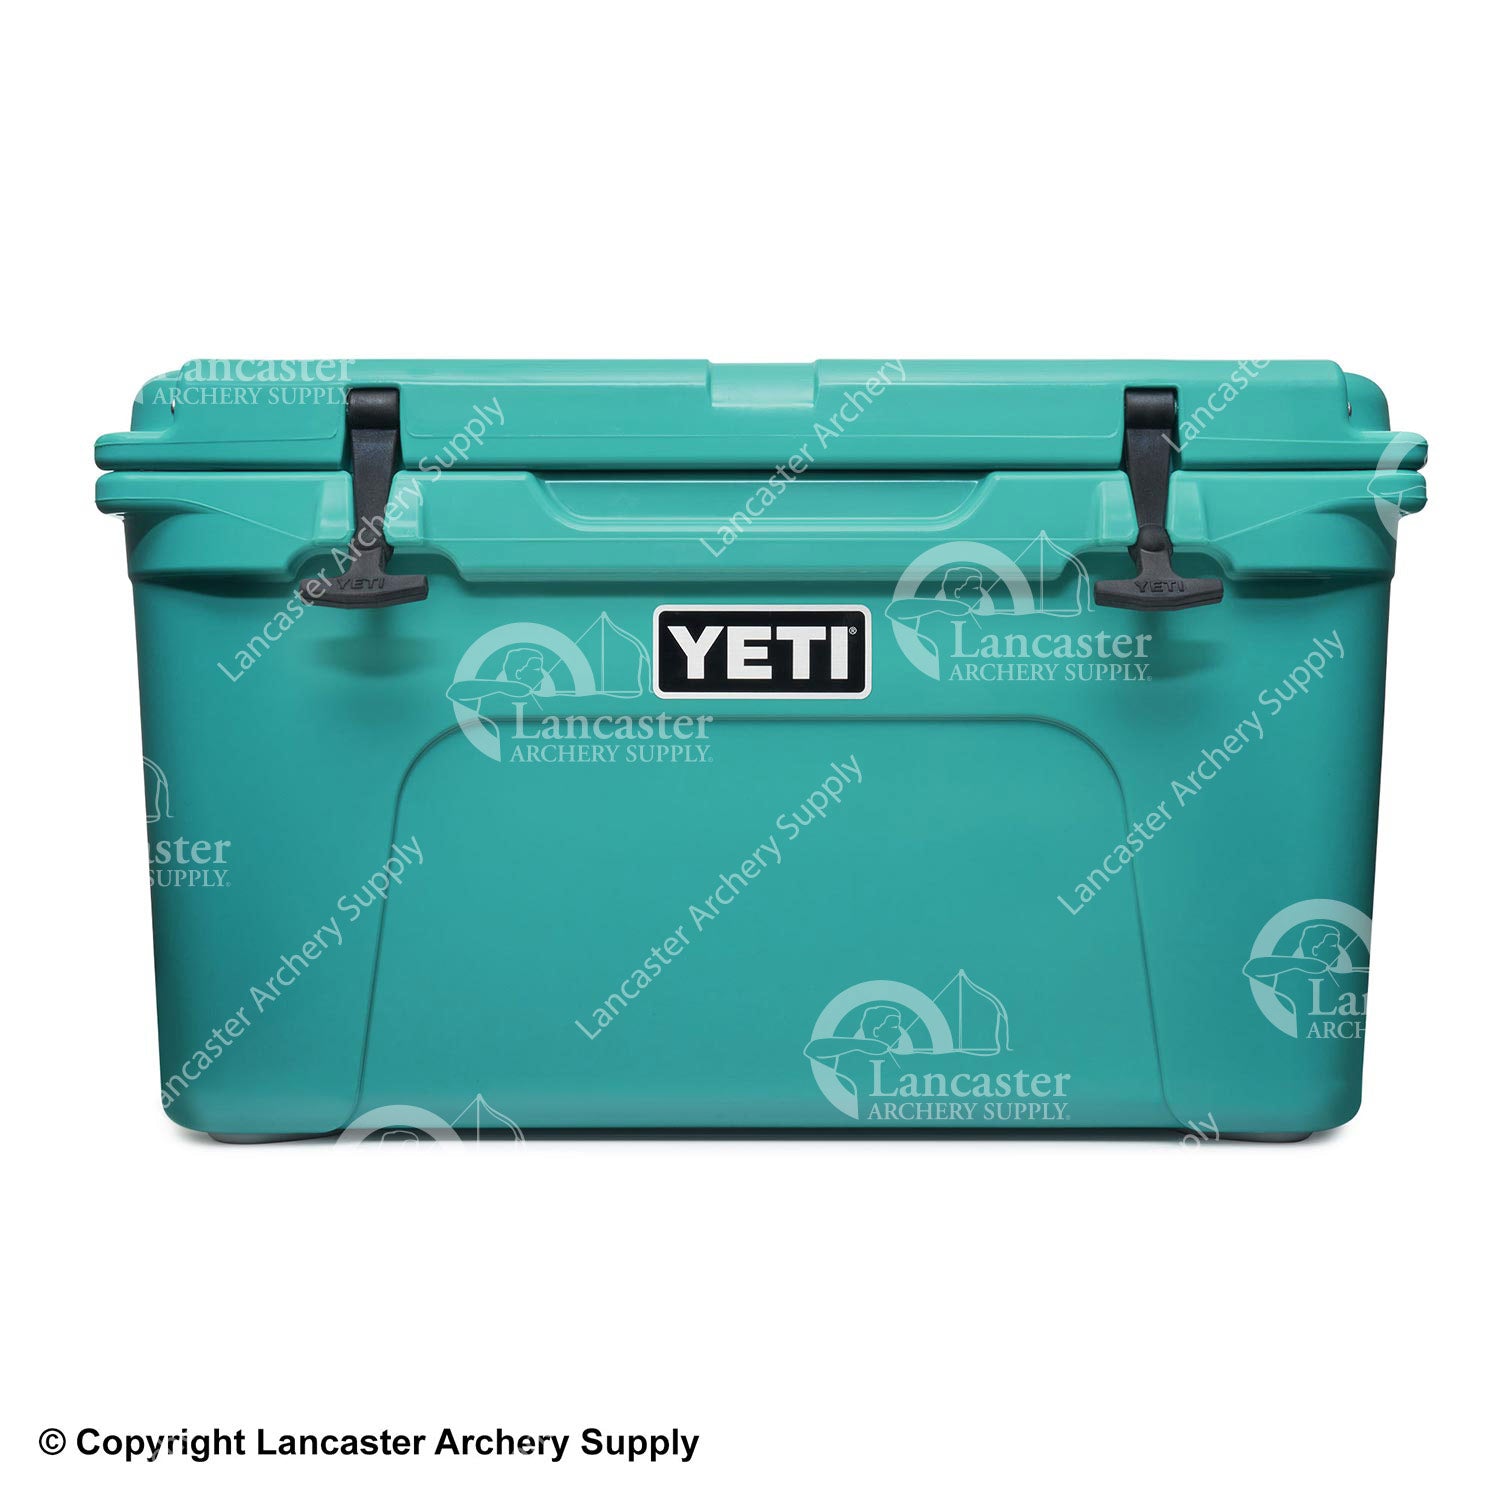 YETI Tundra 45 Cooler (Aquifer Blue Limited Edition)